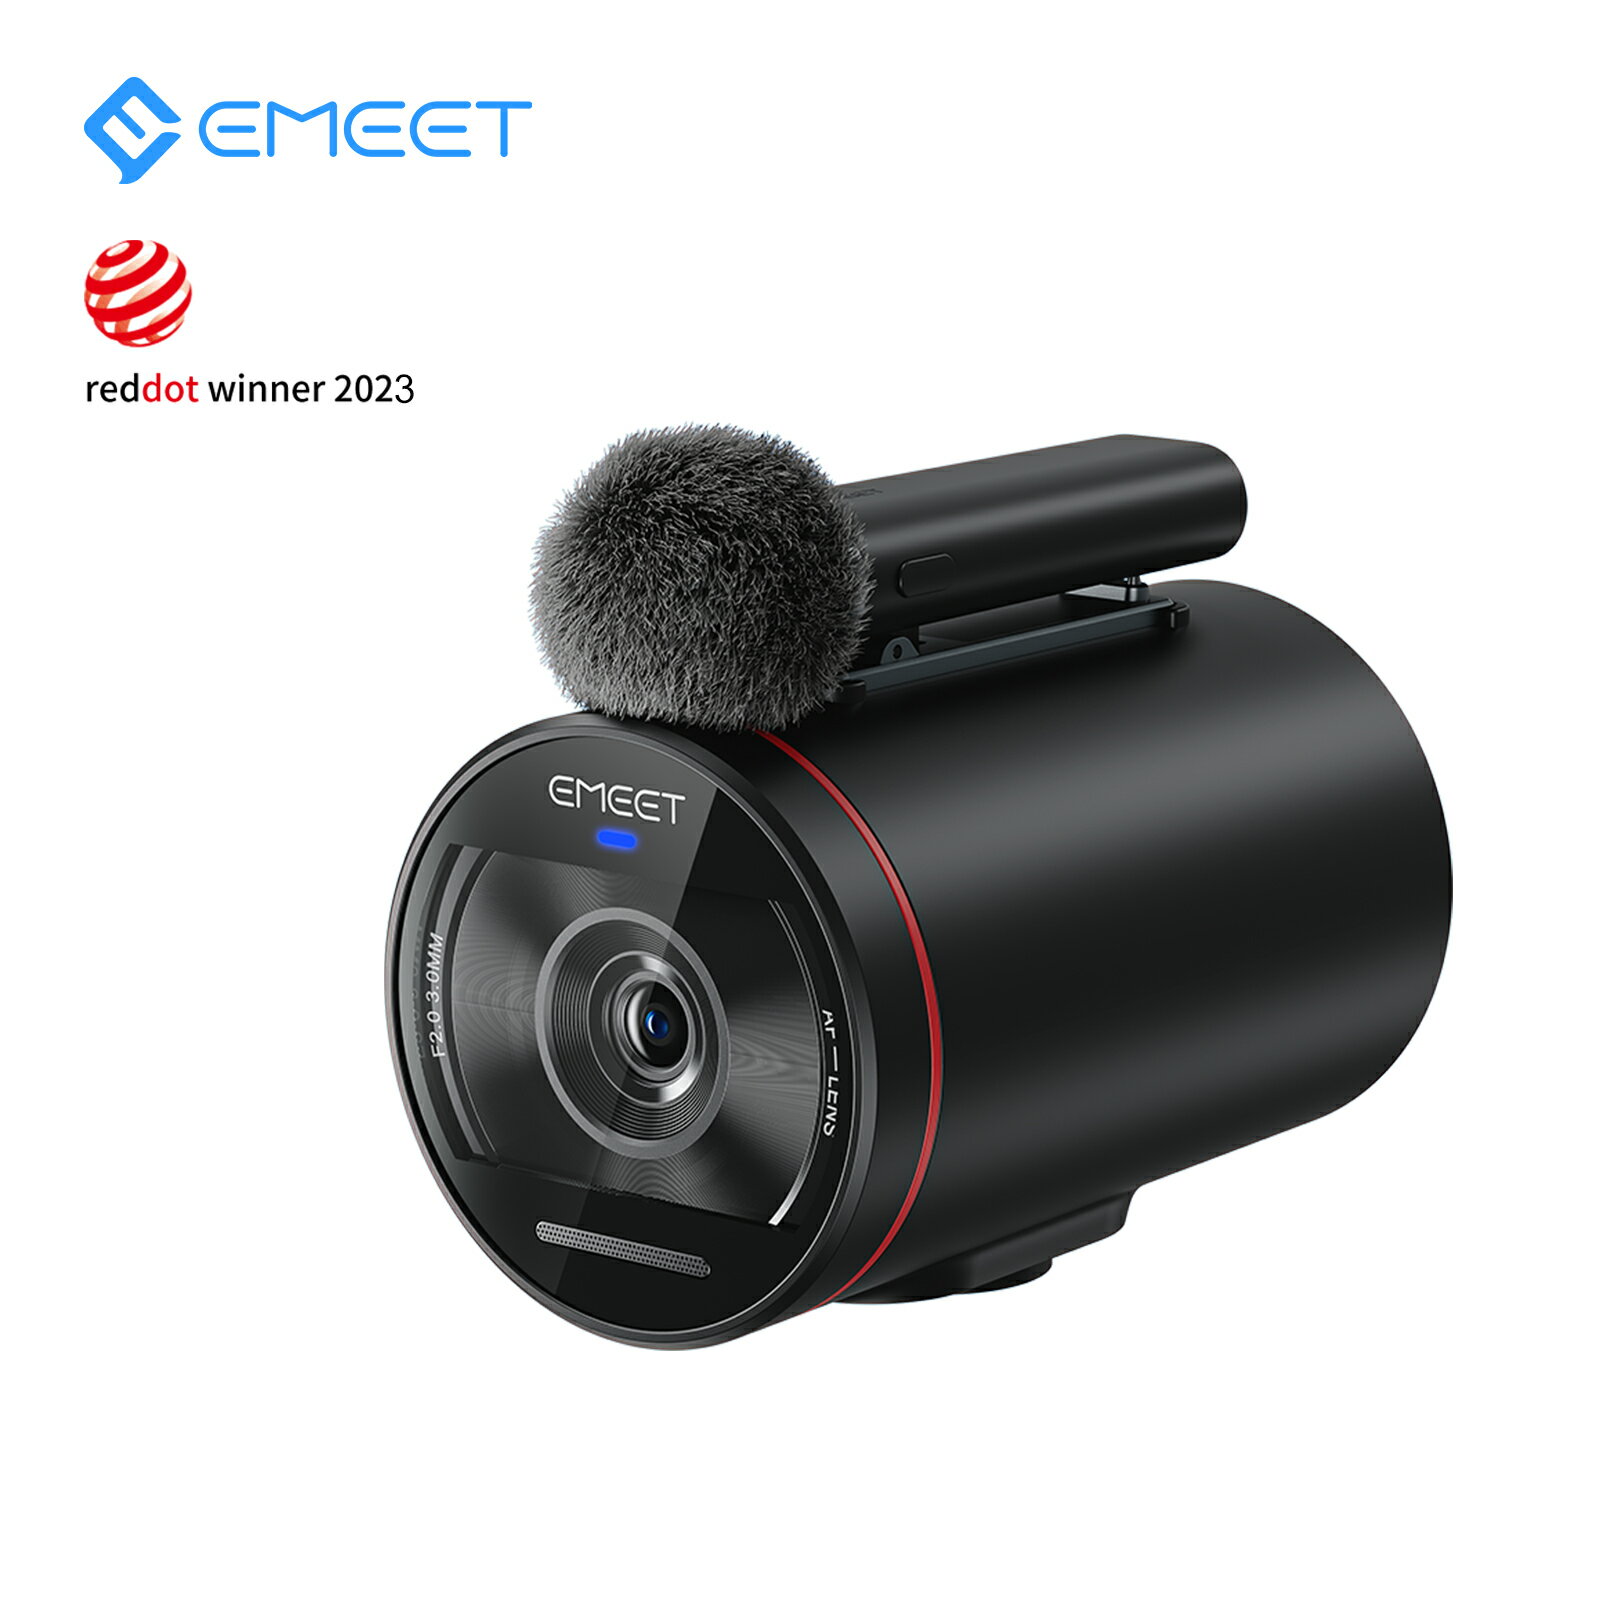 EMEET StreamCam One webカメラ ライブストリーミングカメラ ワイヤレスピンマイク HD1080P ソニーセンサー搭載 マルチカメラ対応 2つマイク内蔵 8時間駆動 ウェブカメラ 生放送 ライブ配信 動…